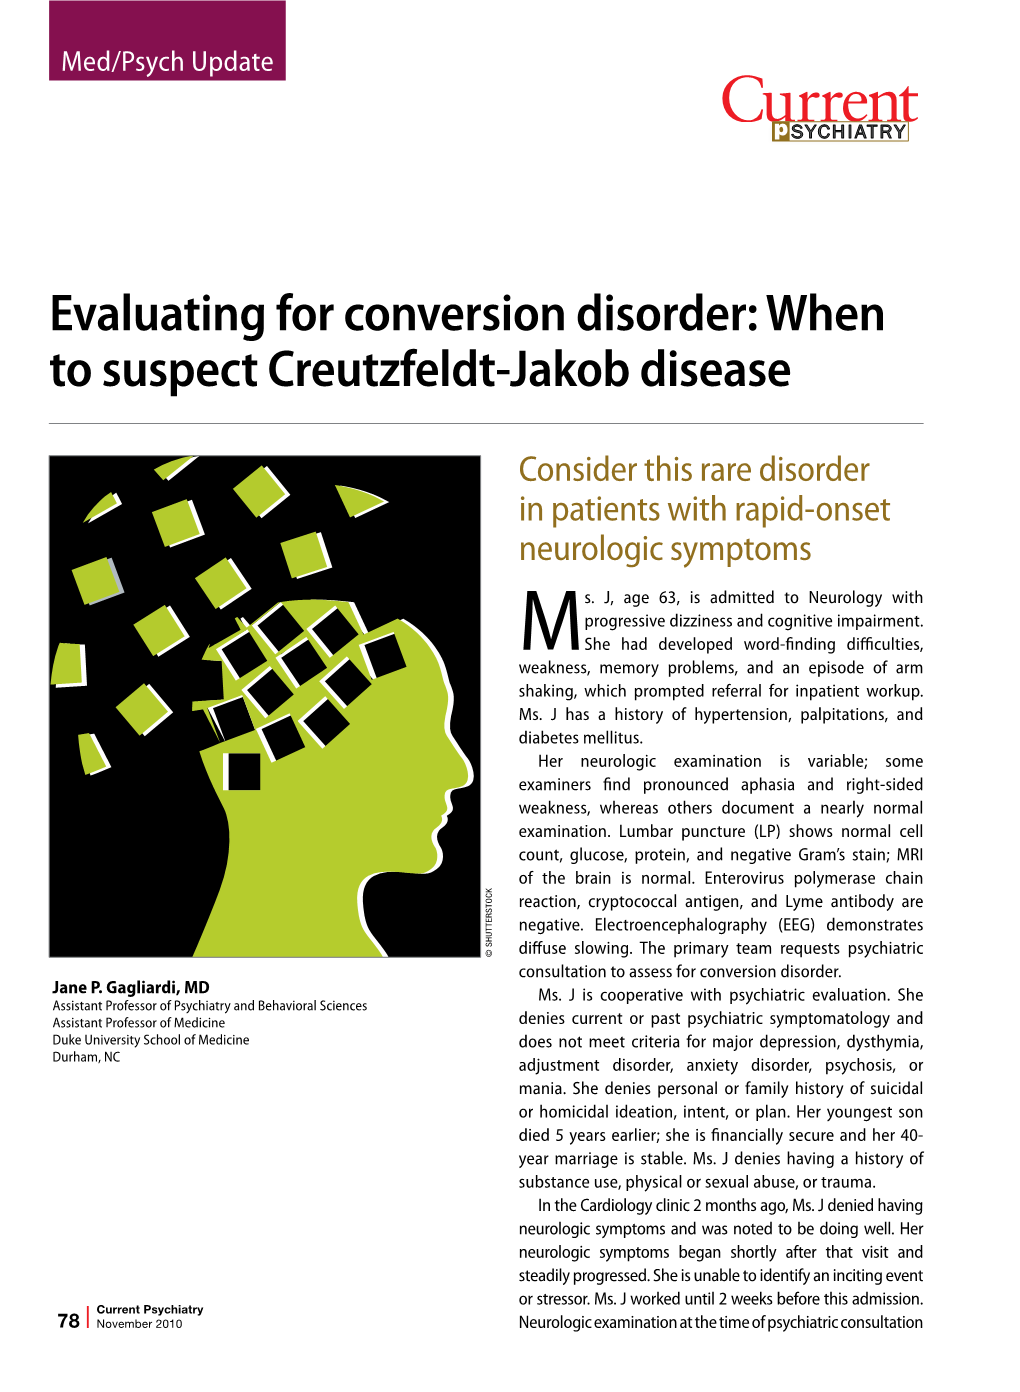 Evaluating for Conversion Disorder: When to Suspect Creutzfeldt-Jakob Disease